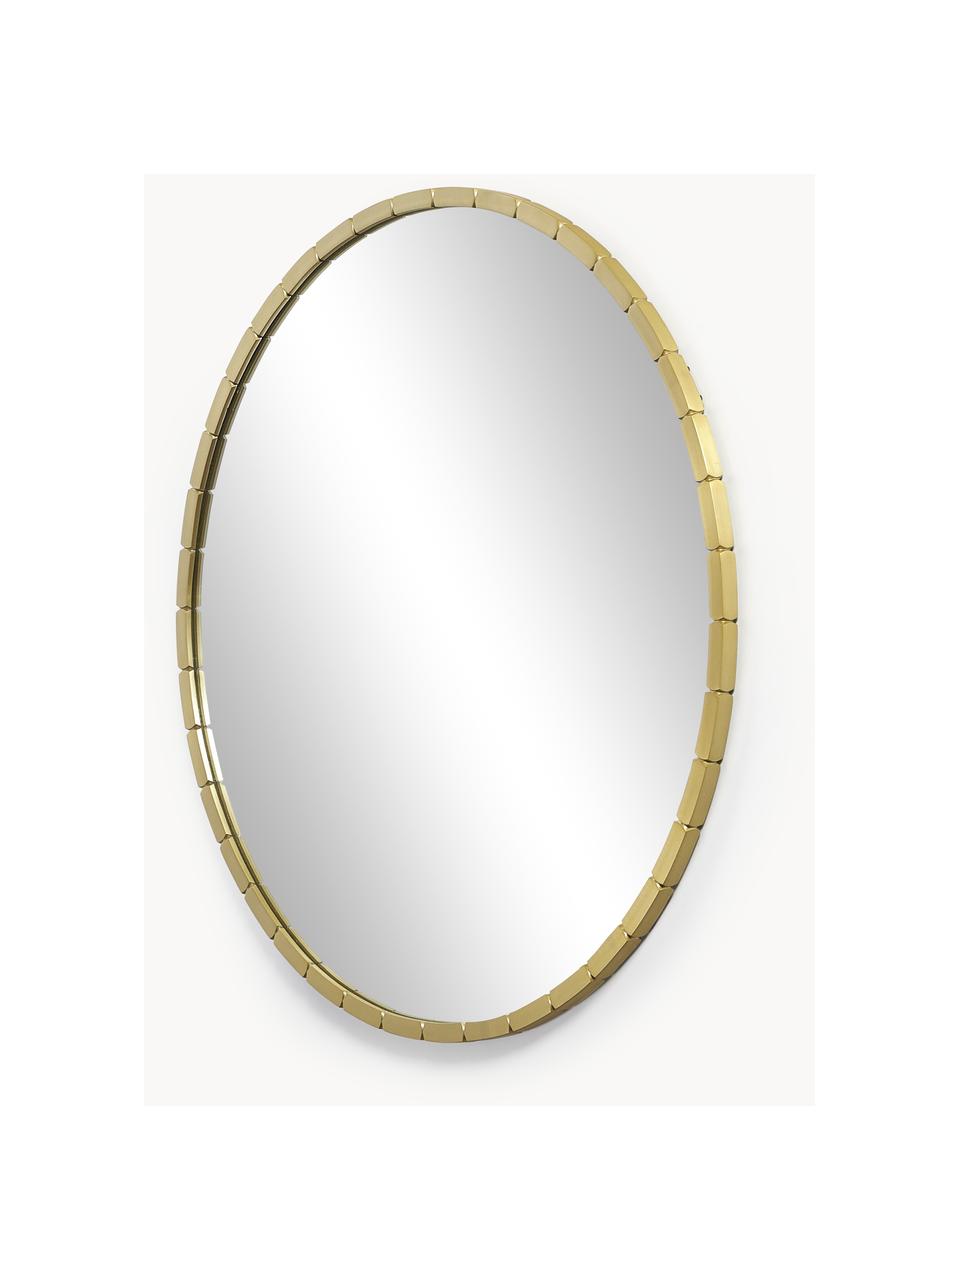 Kulaté nástěnné zrcadlo Alaia, Zlatá, Ø 82 cm